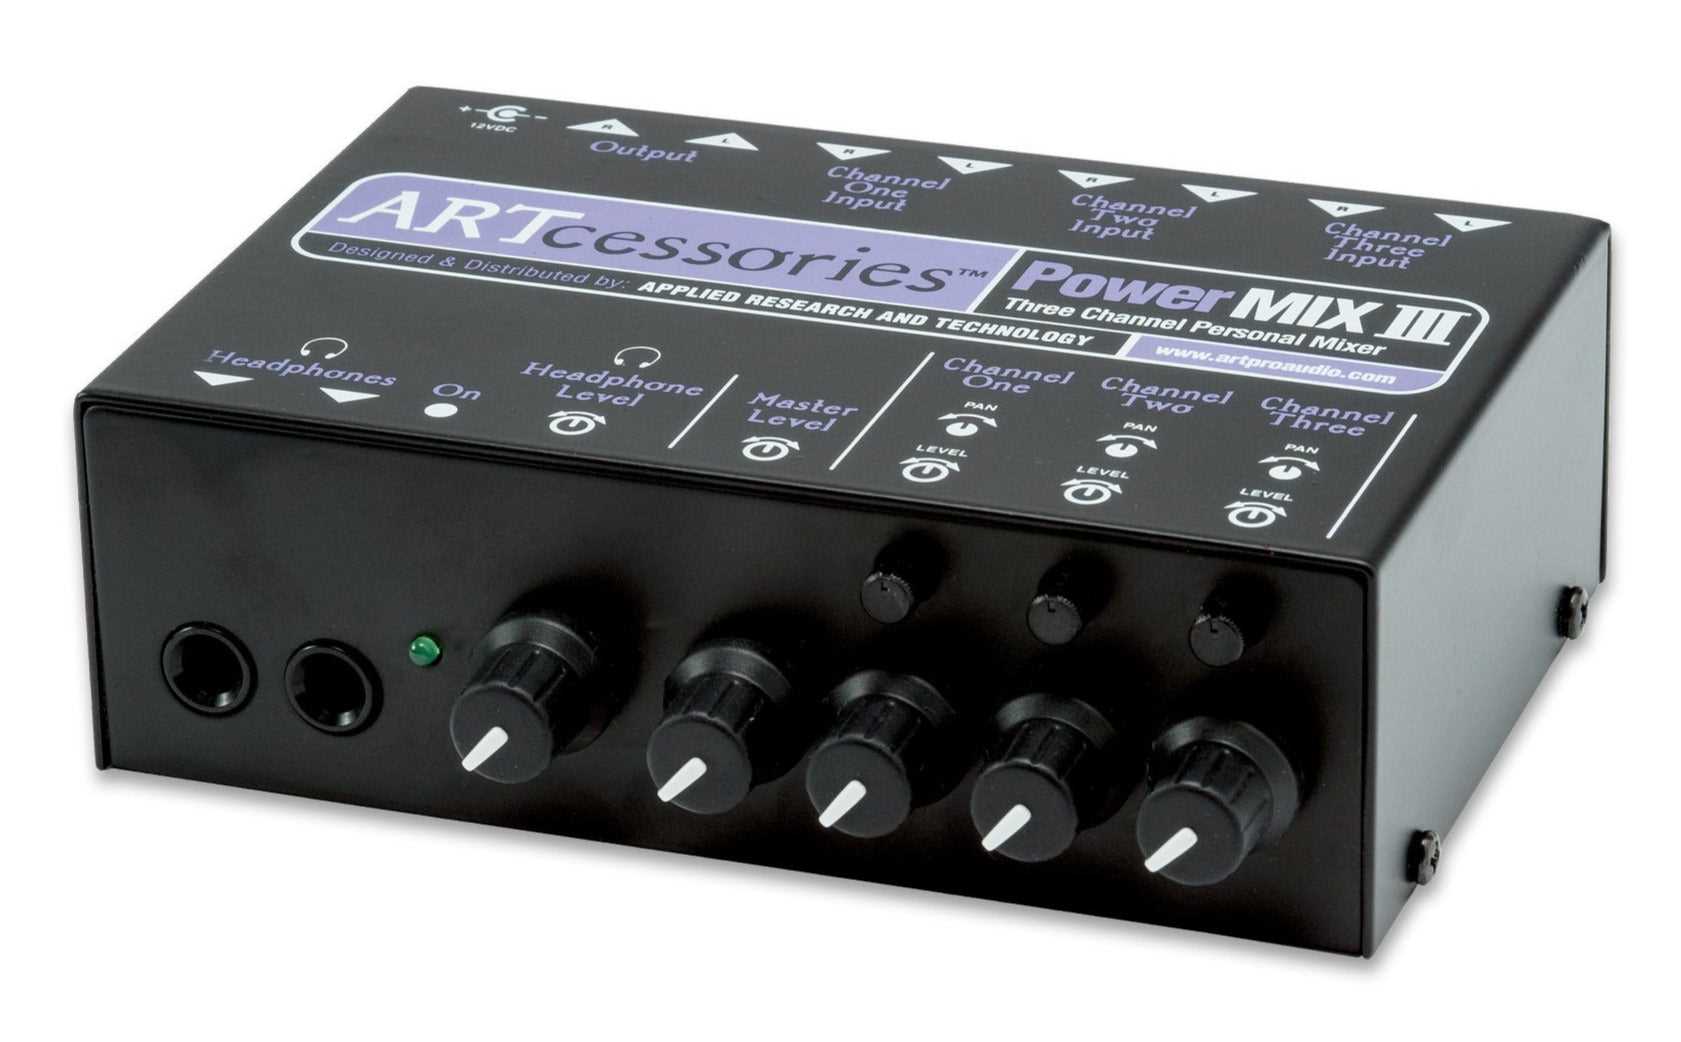 ART PowerMIX III 3-channel Stereo Line Mixer